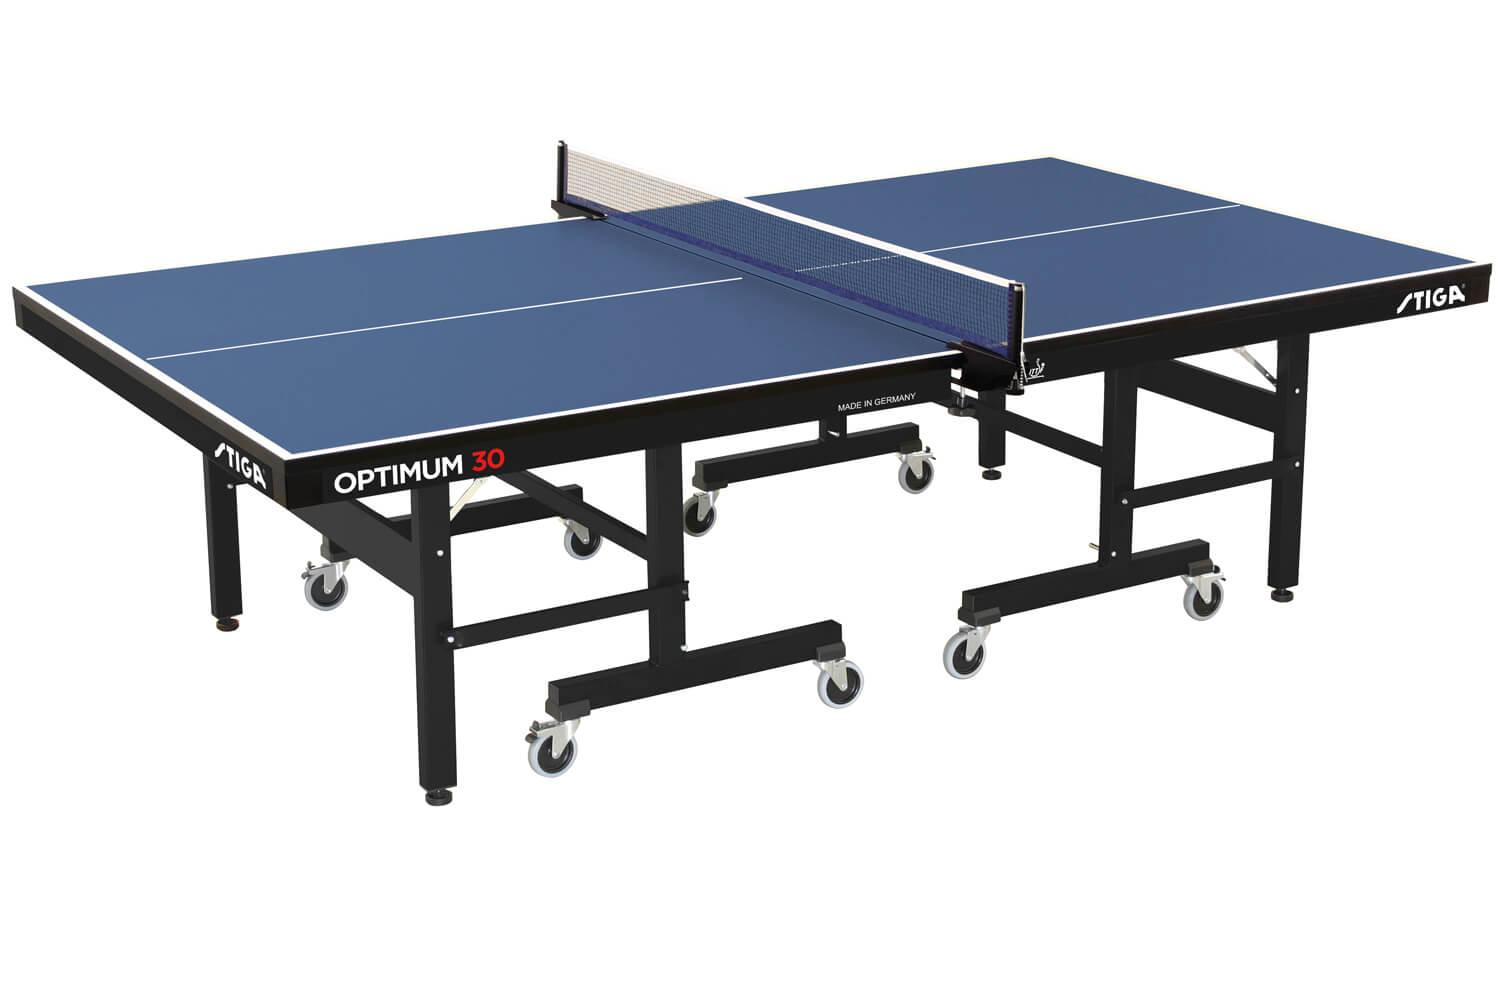 Stiga Optimum 30 Indoor Table Tennis Table | Liberty Games